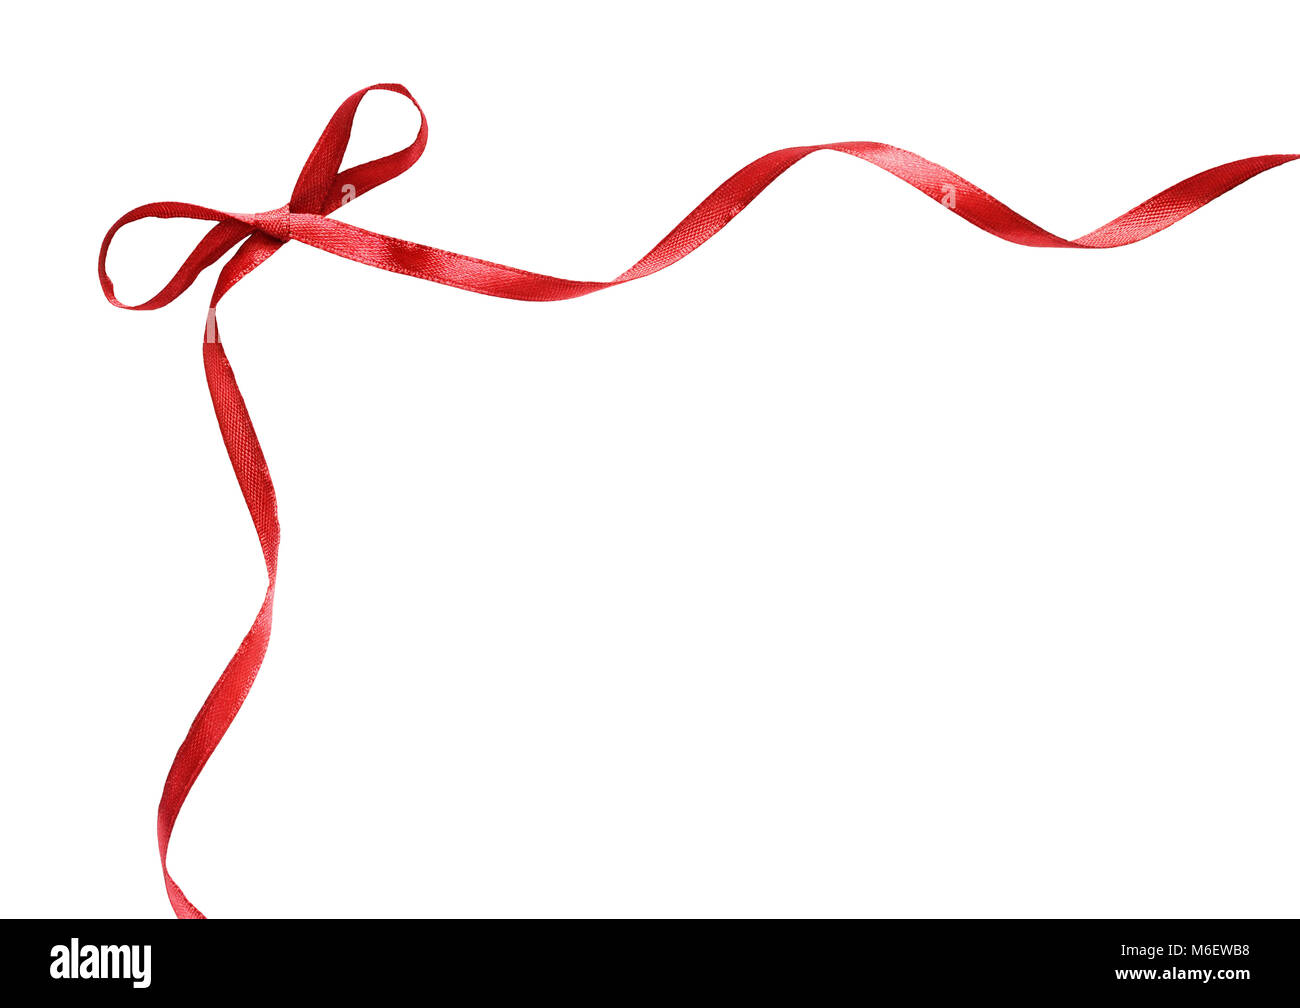 Red silk ribbon stock image. Image of corner, braiding - 17538851